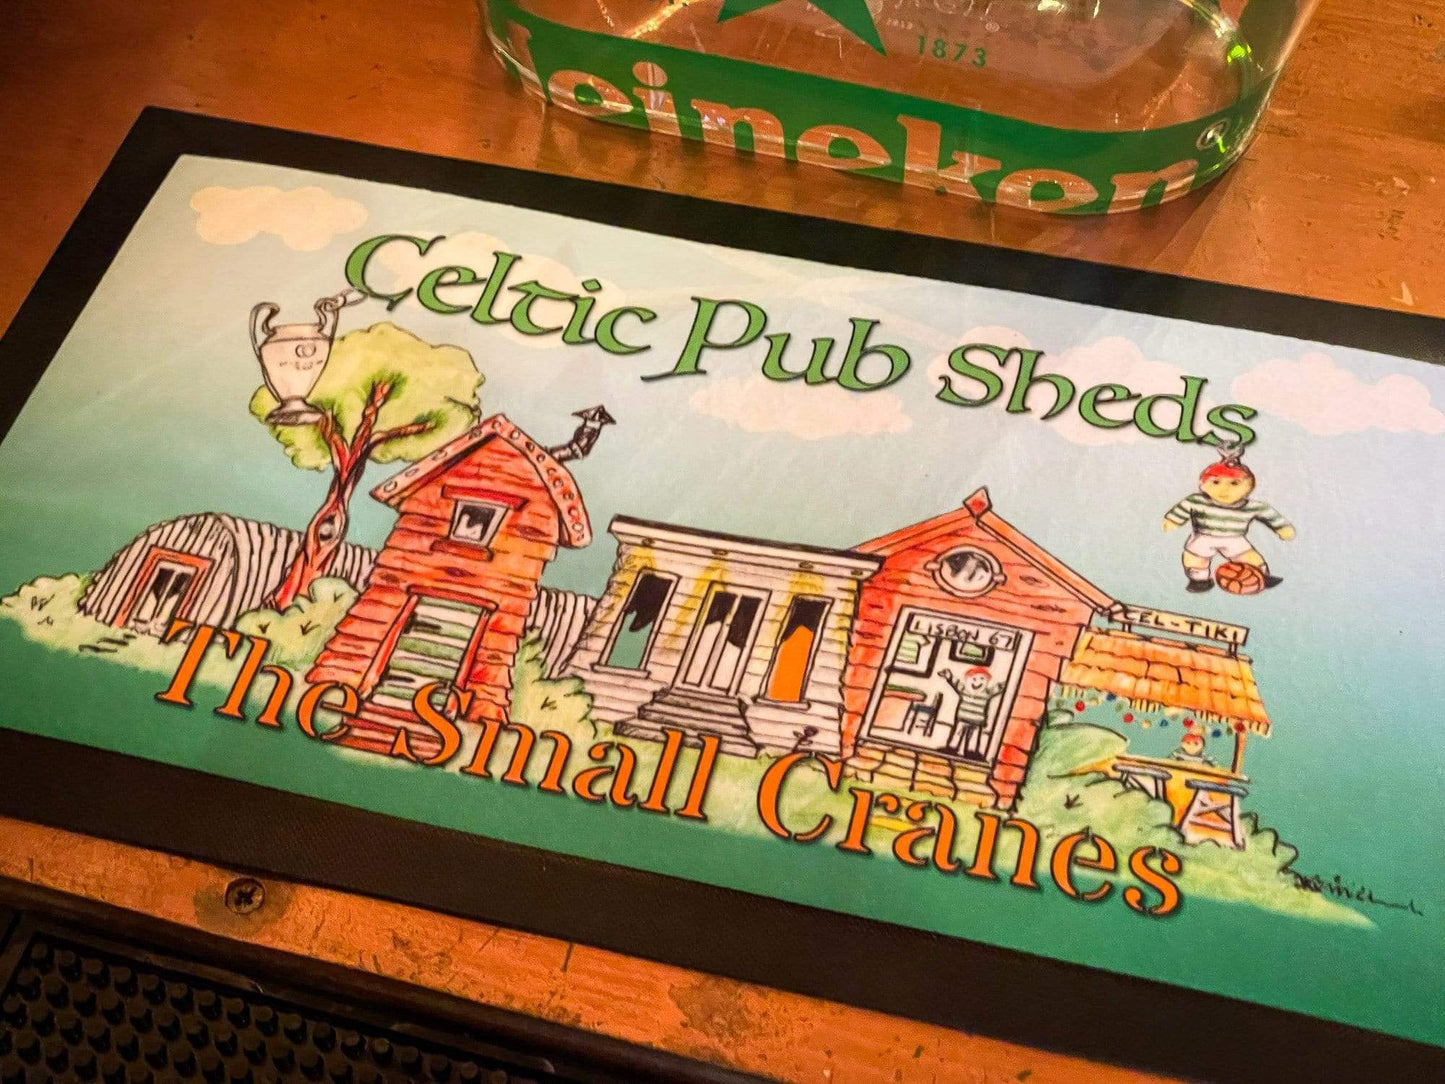 Celtic Pub Sheds Bar Runner Raise the Bar Print and Design - Raise the Bar